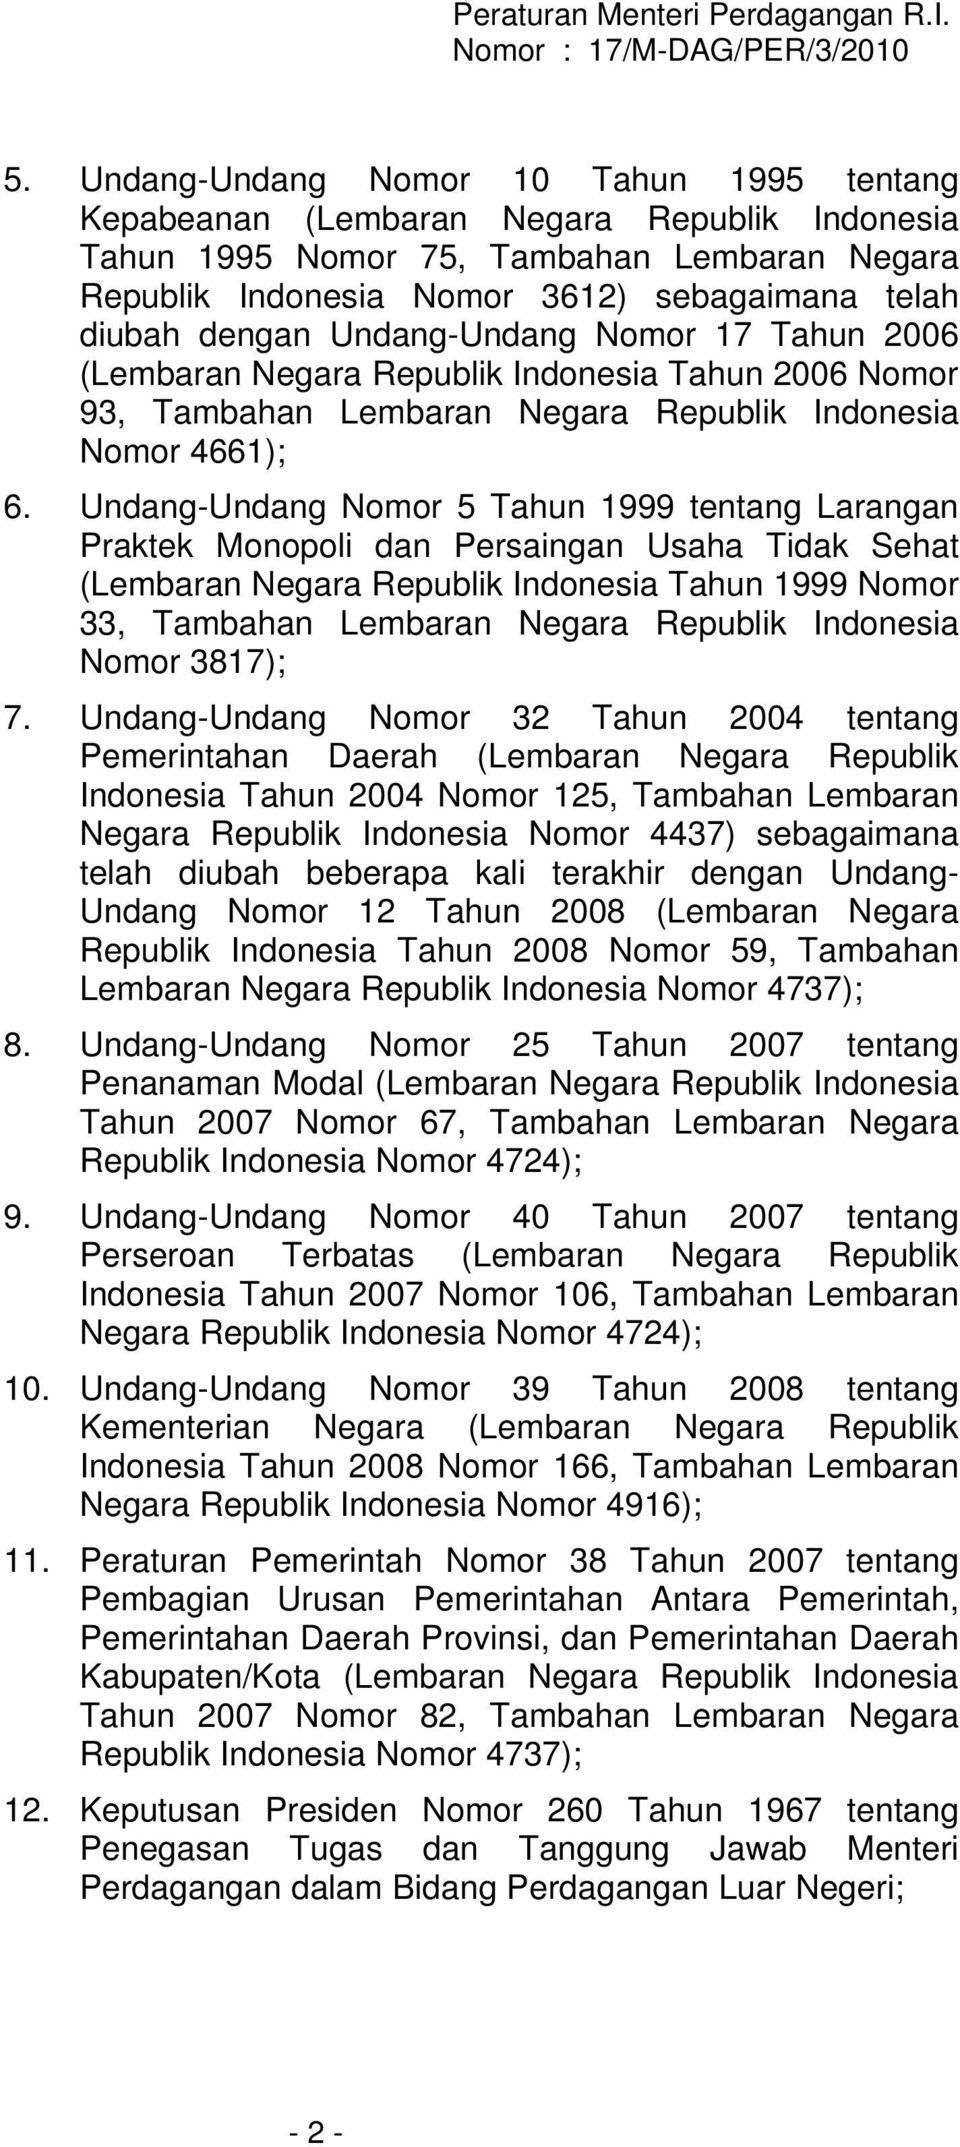 Undang-Undang Nomor 5 Tahun 1999 tentang Larangan Praktek Monopoli dan Persaingan Usaha Tidak Sehat (Lembaran Negara Republik Indonesia Tahun 1999 Nomor 33, Tambahan Lembaran Negara Republik